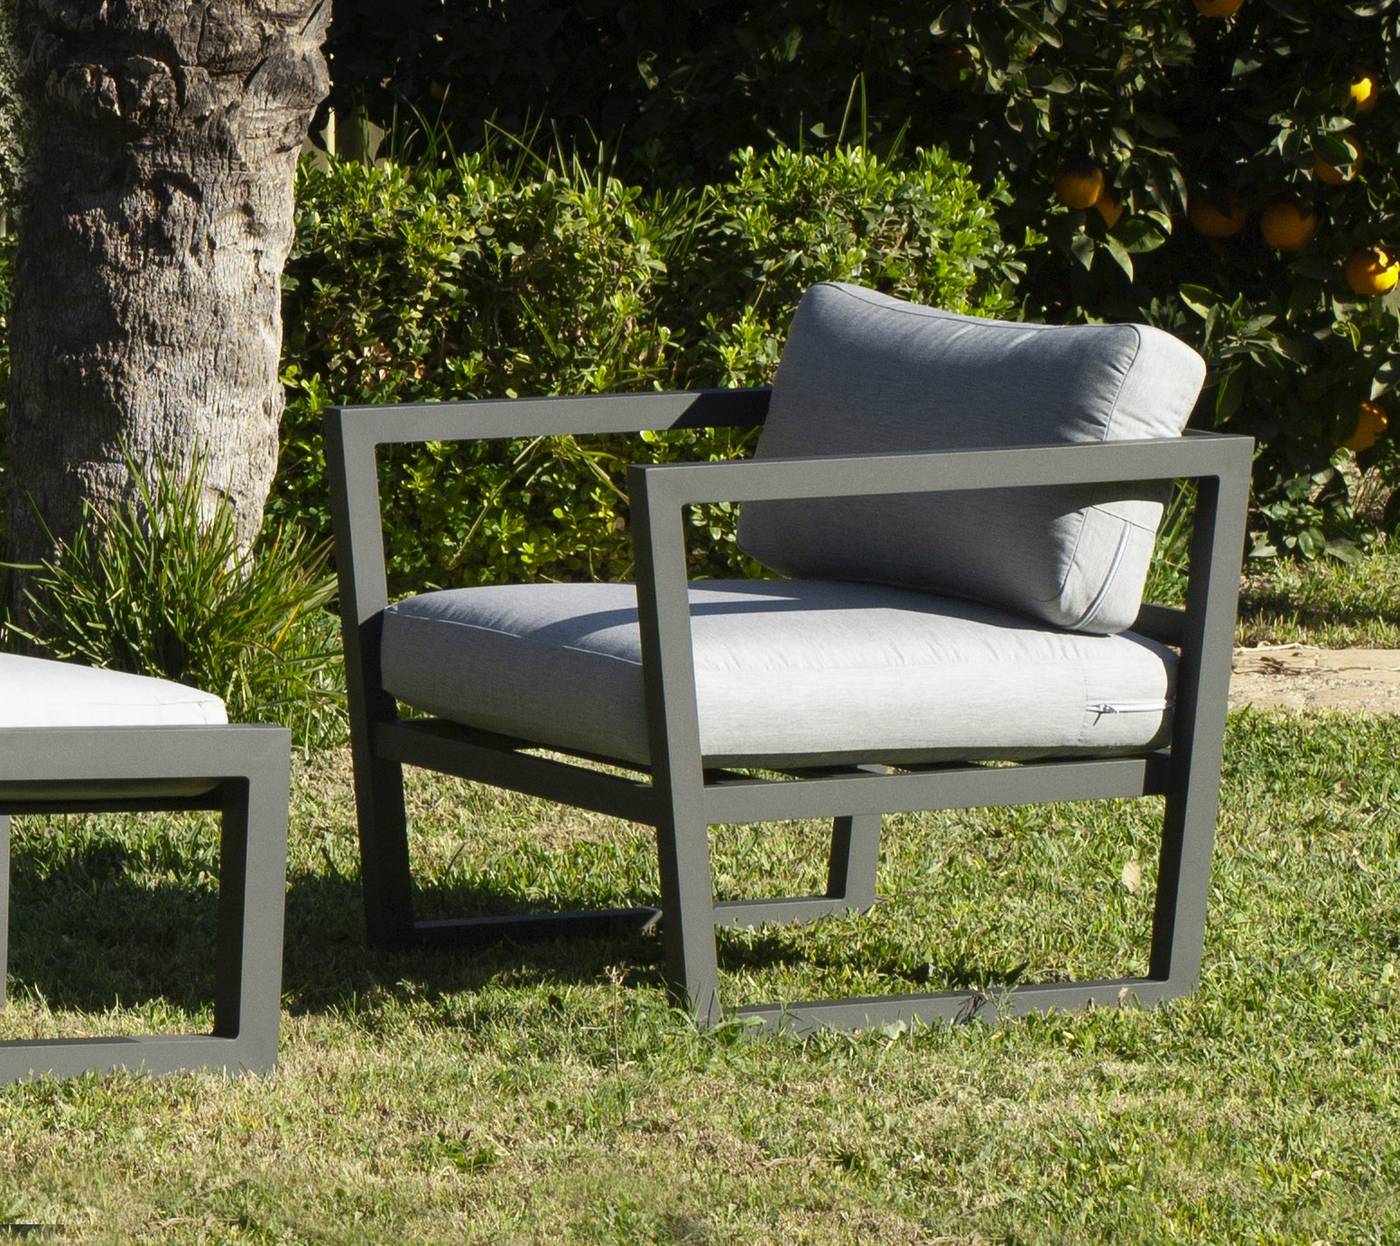 Set Aluminio Luxe Montana-9 - Conjunto aluminio: 1 sofá 2 plazas + 2 sillones + 1 mesa de centro + 2 reposapiés + cojines. Disponible en color blanco o antracita.